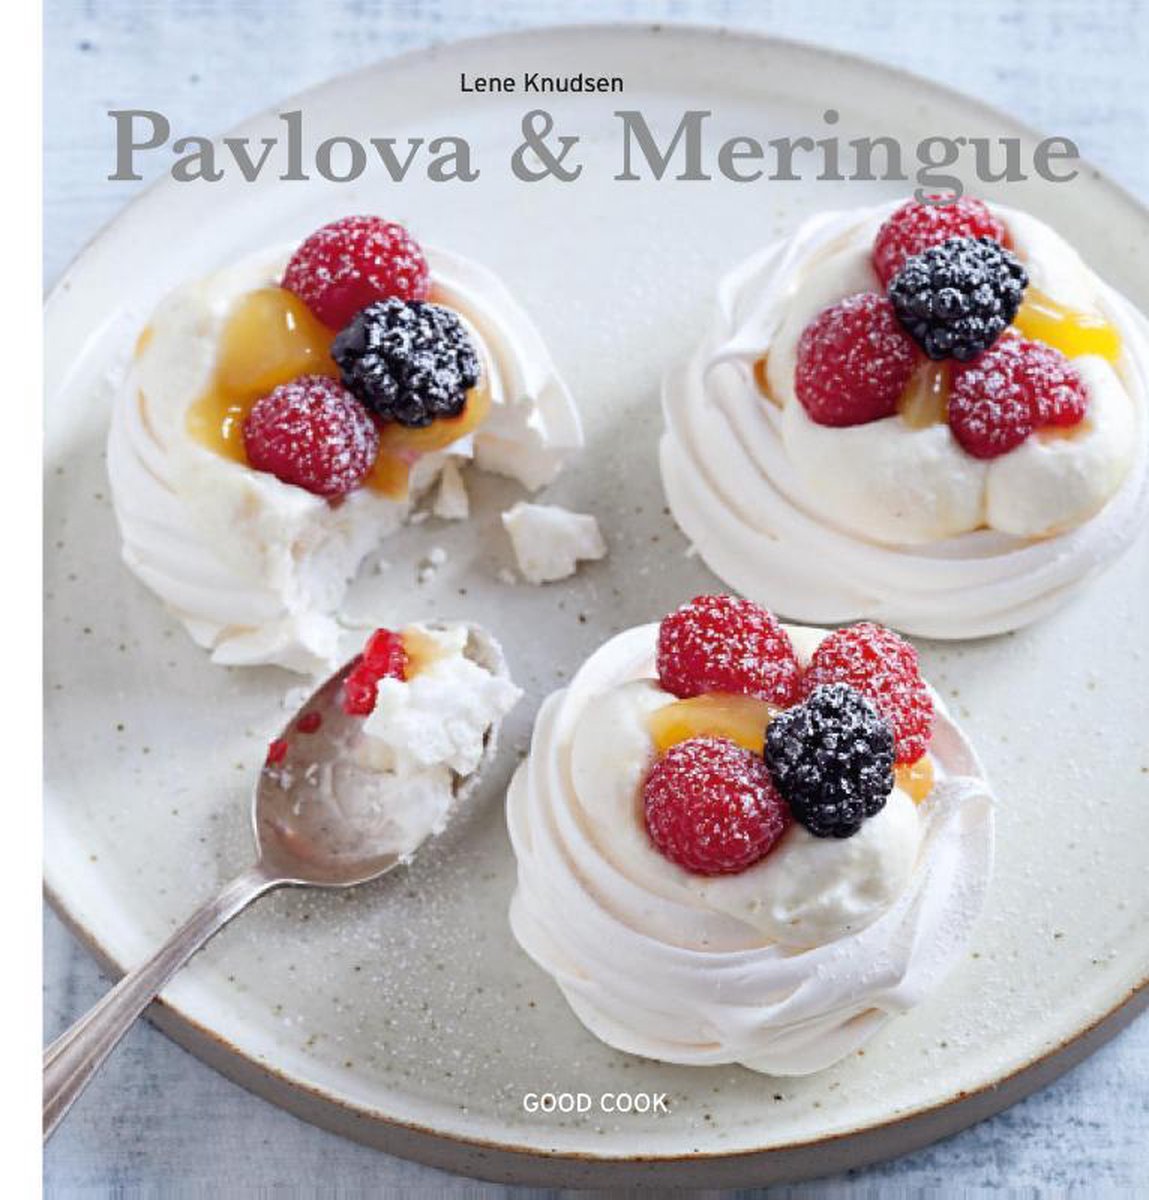 Pavlova & meringue - Lene Knudsen